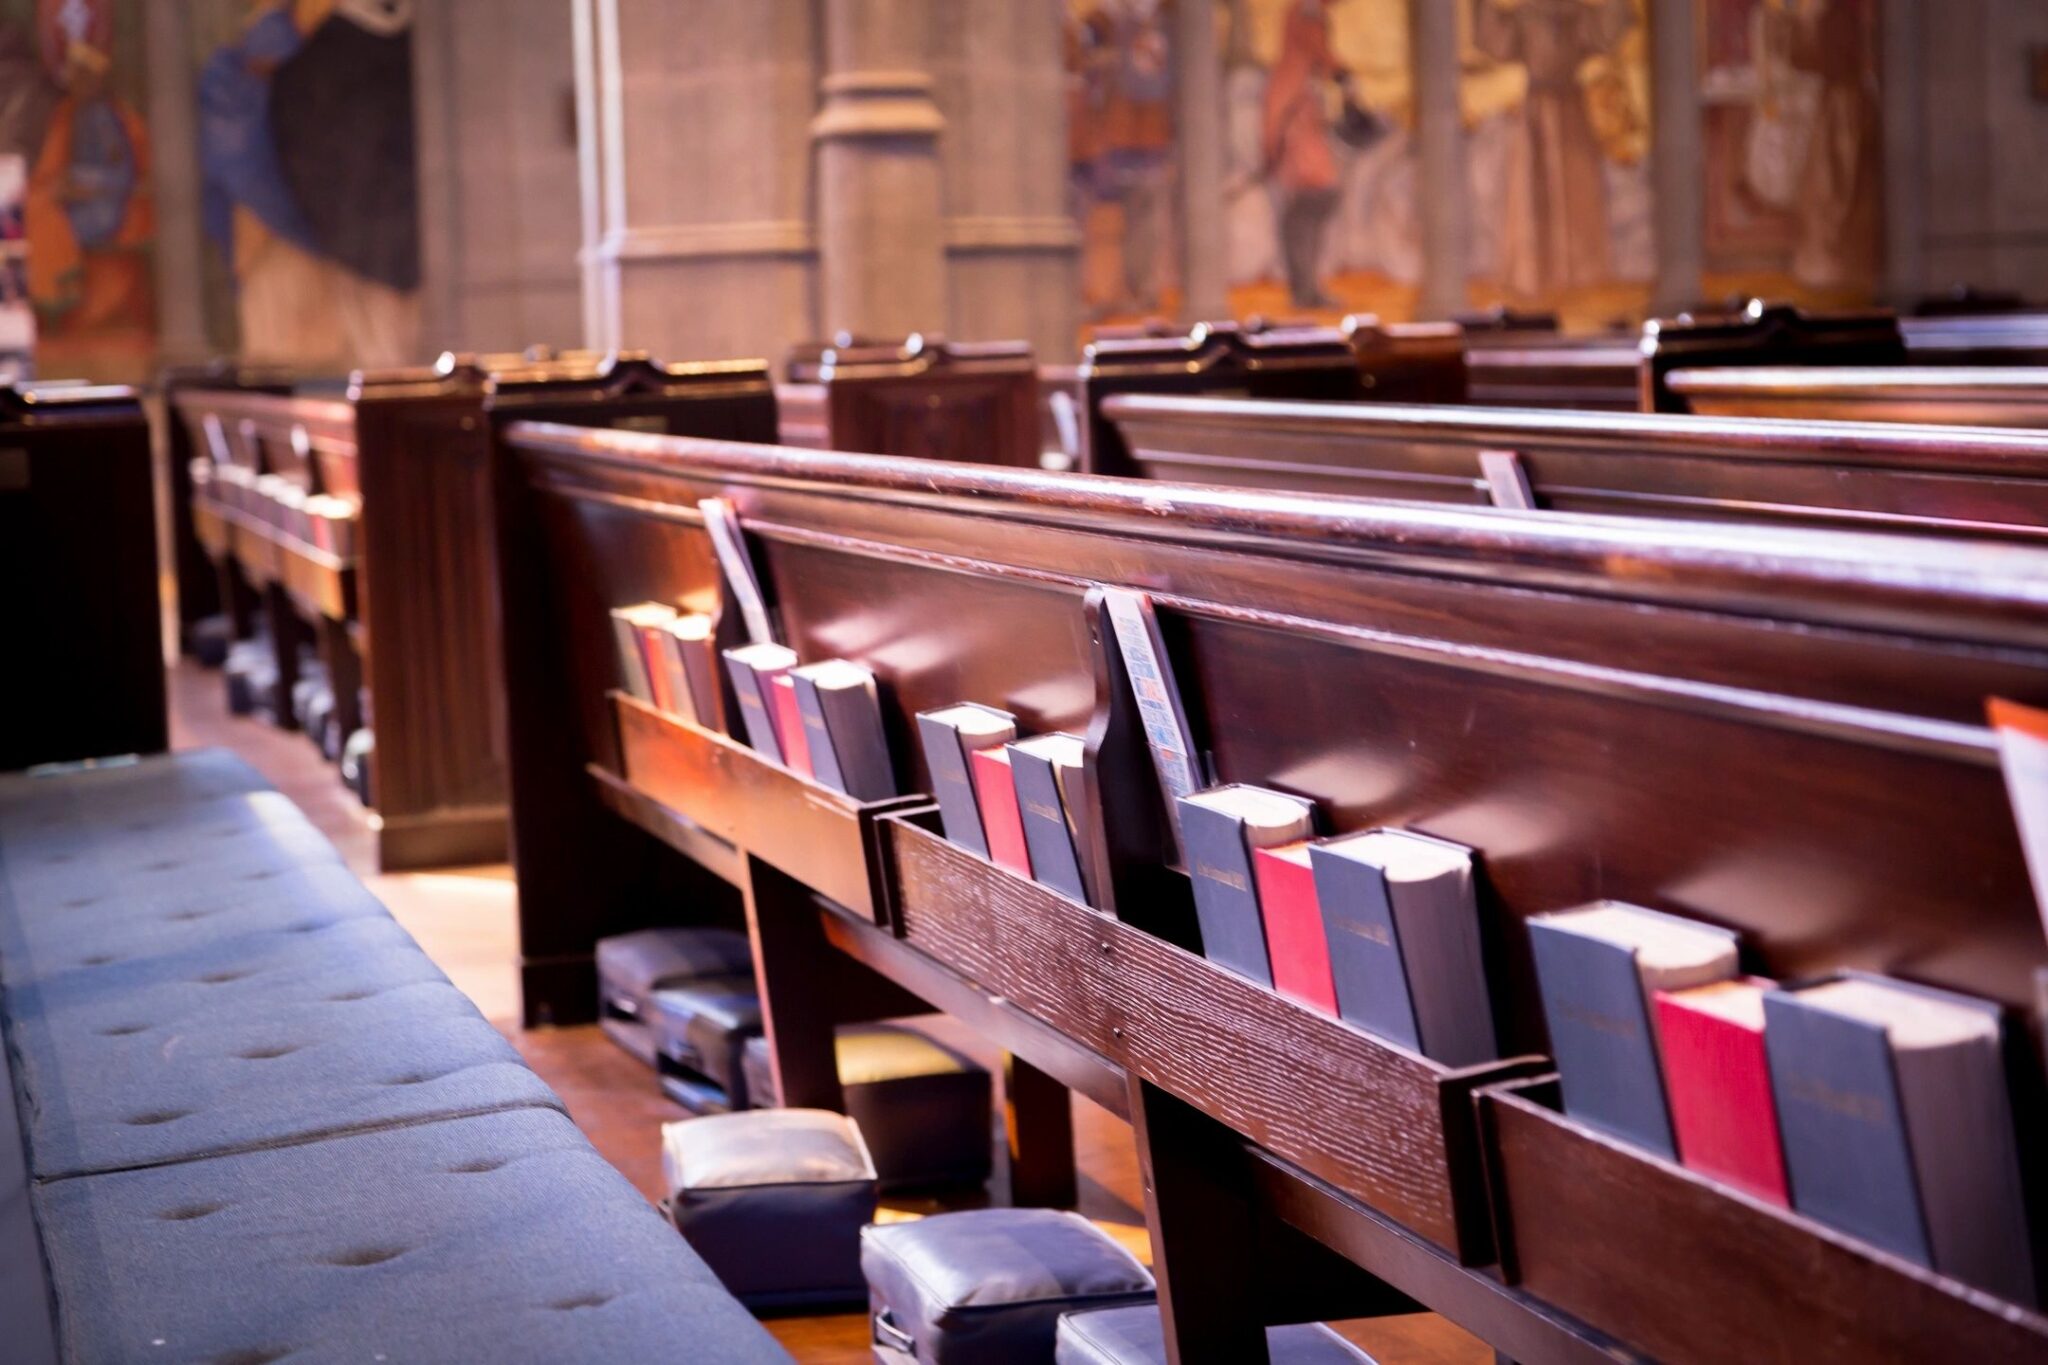 “All Saints Parish” New Name For Butler Catholic Churches